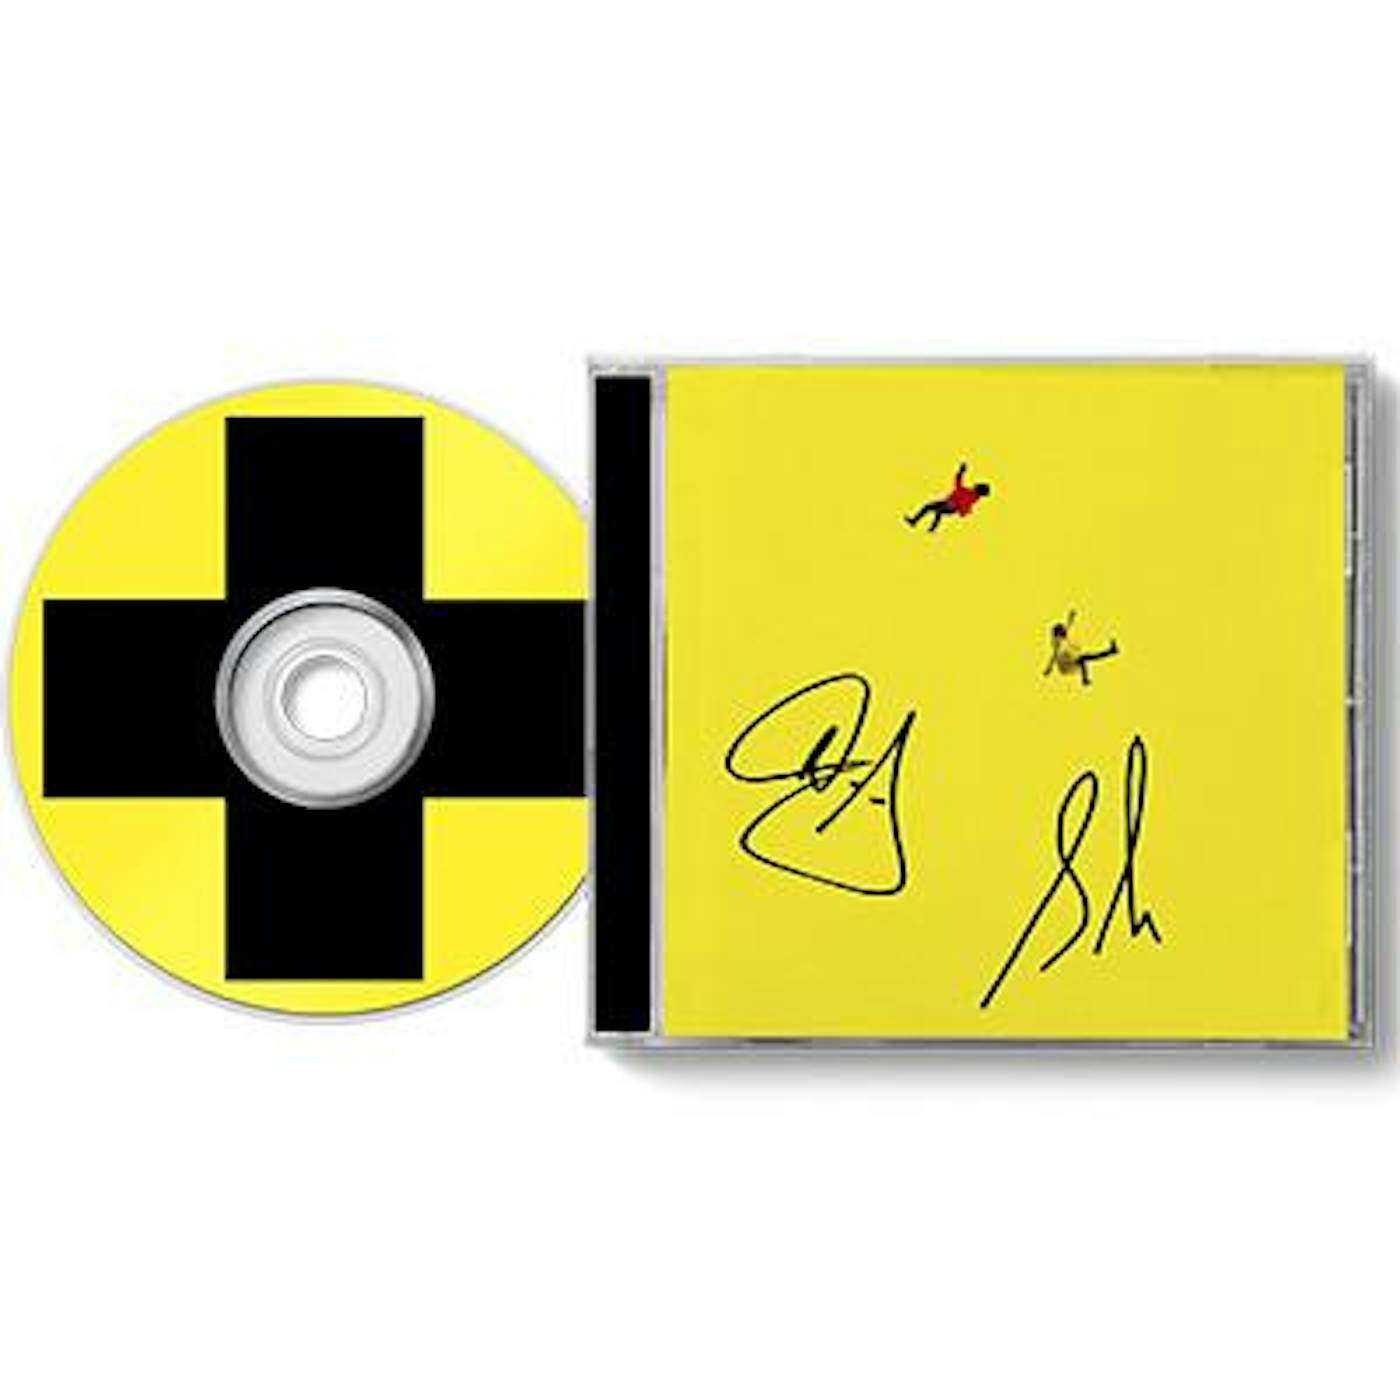 Dan + Shay "I Should Probably Go To Bed" CD Single